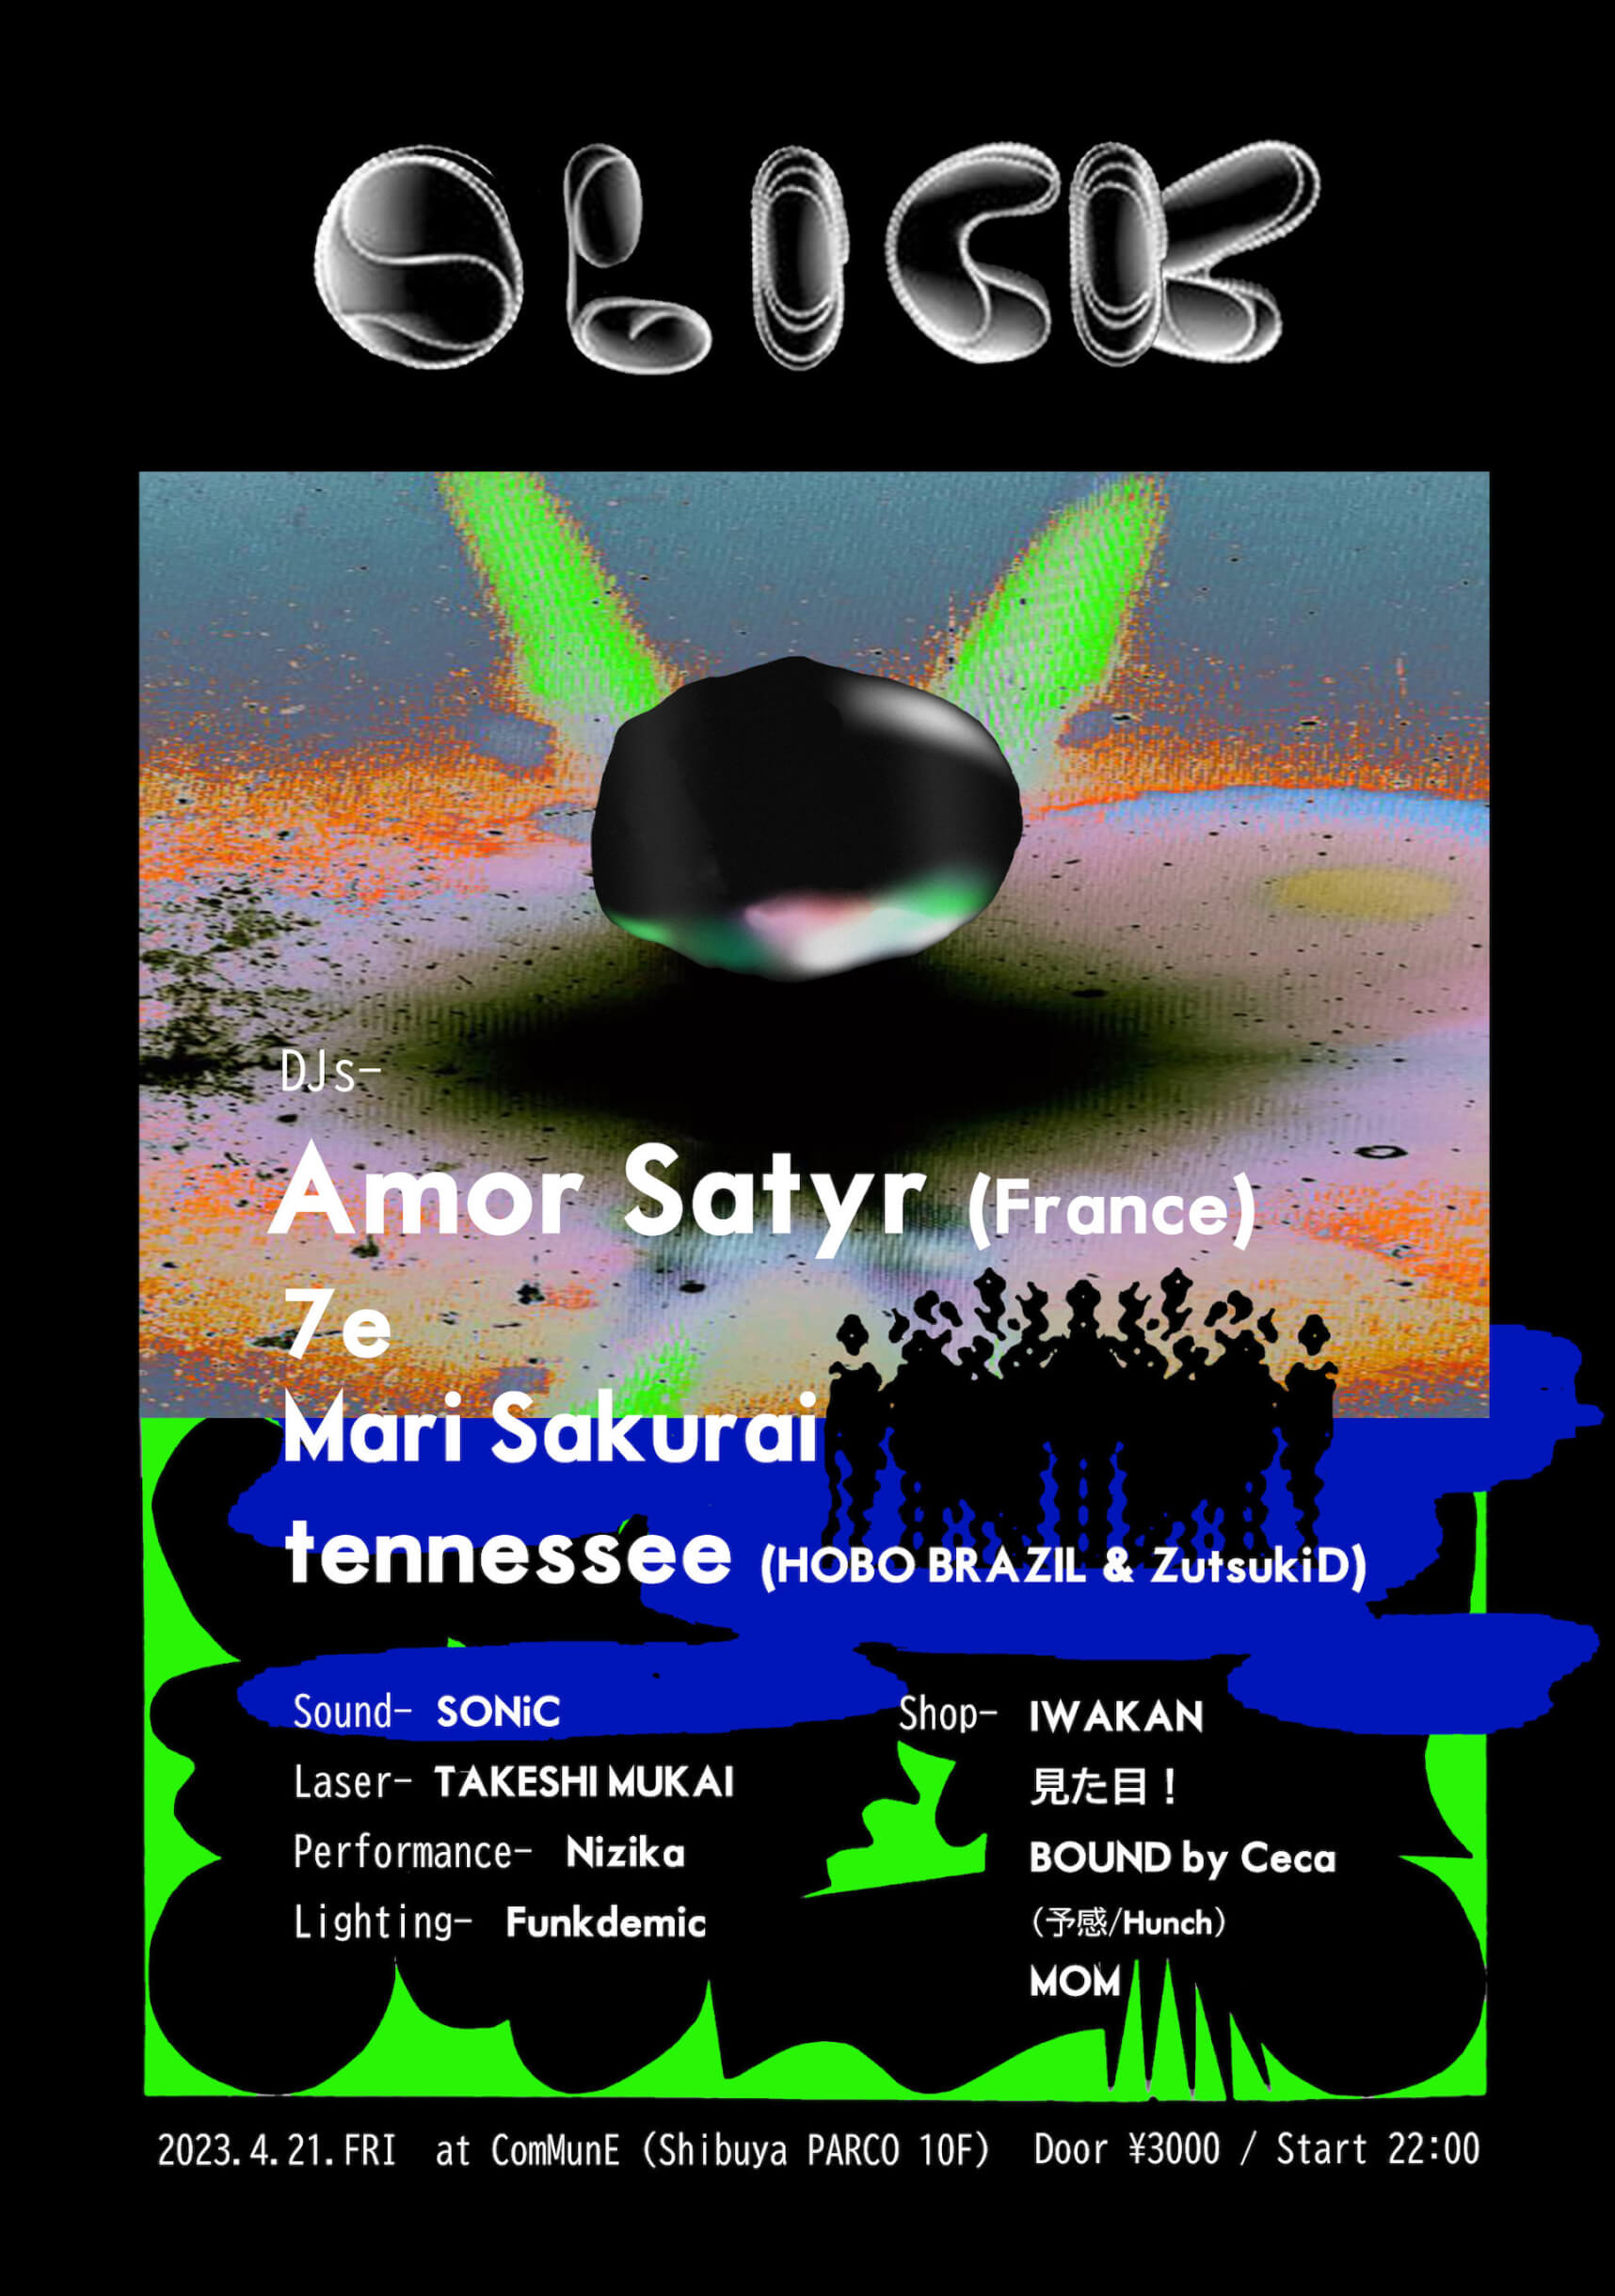 Amor Satyrの初来日が決定｜オープンマインドな居場所を提供するレイヴ